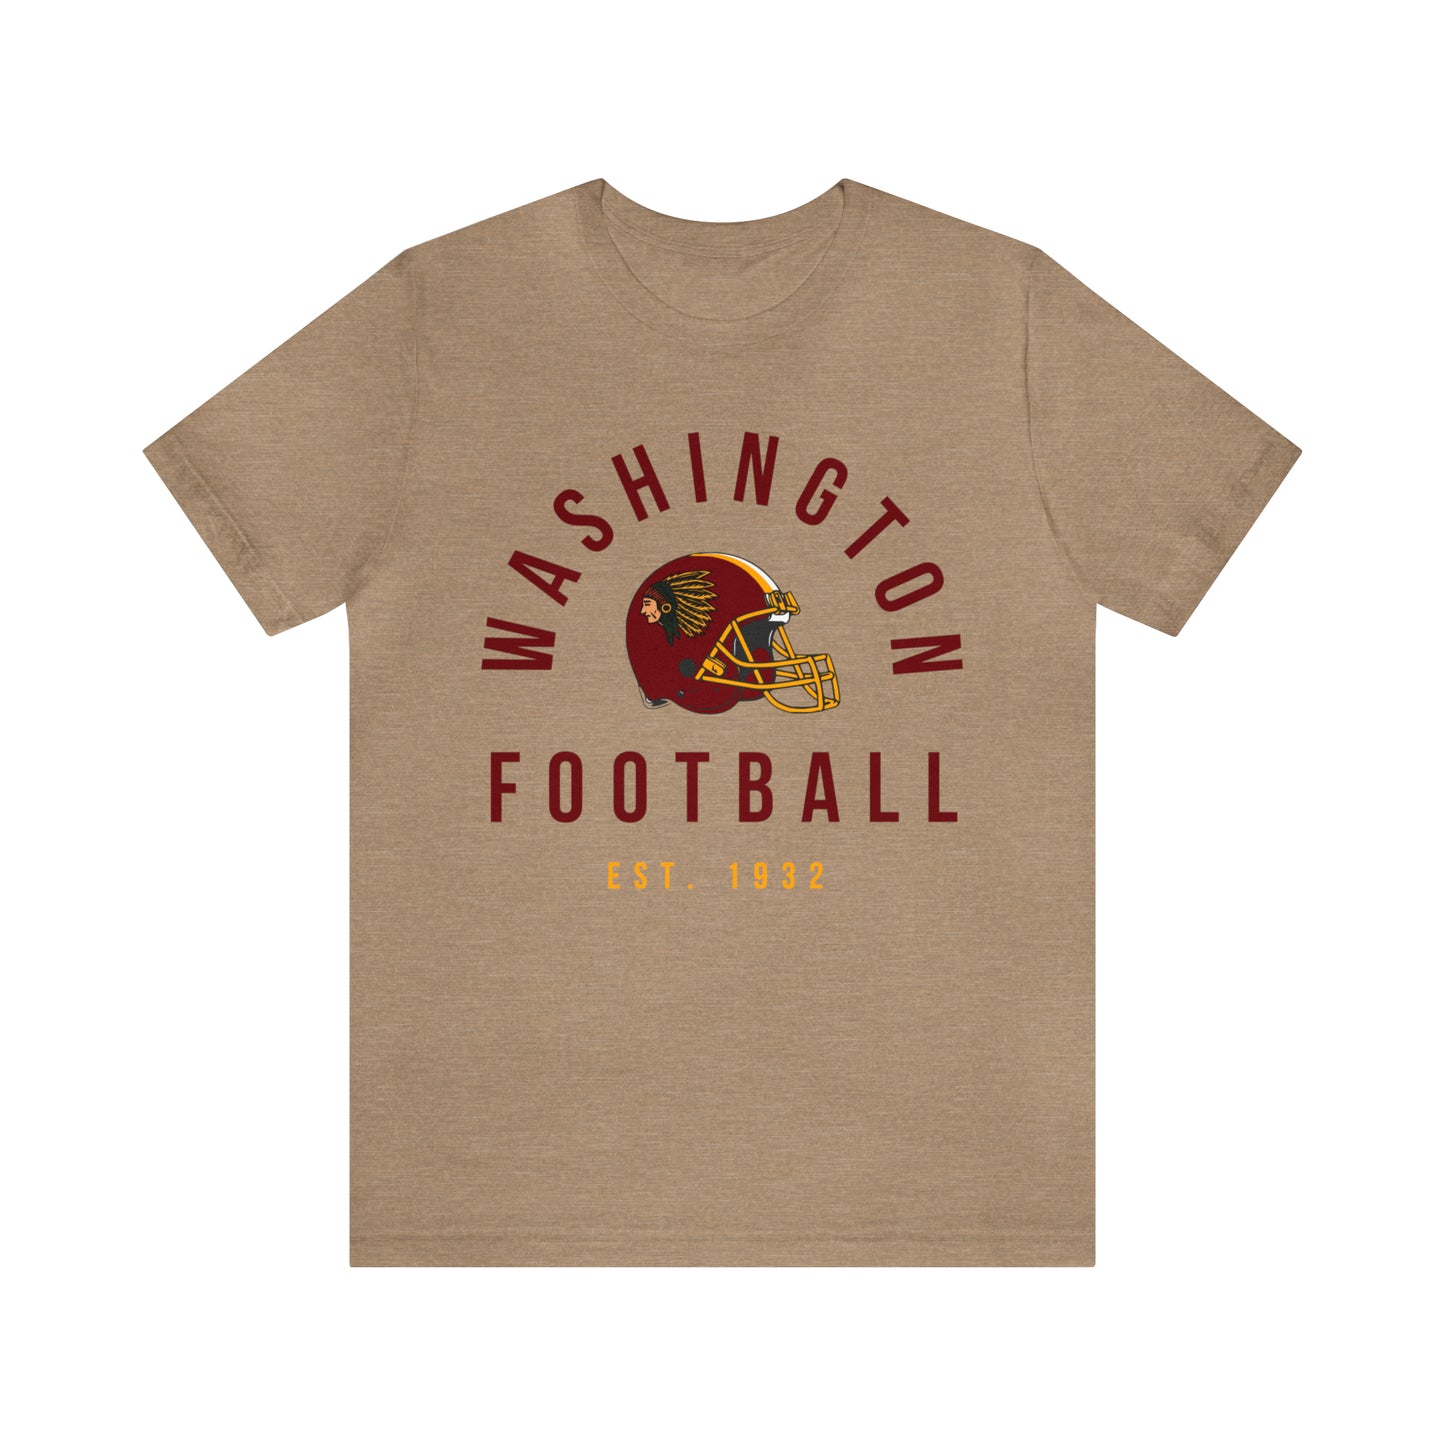 Throwback Washington Redskins Short Sleeve T-Shirt - Vintage Football Tee - Retro Commanders 70's, 80's, 90's - Design 2